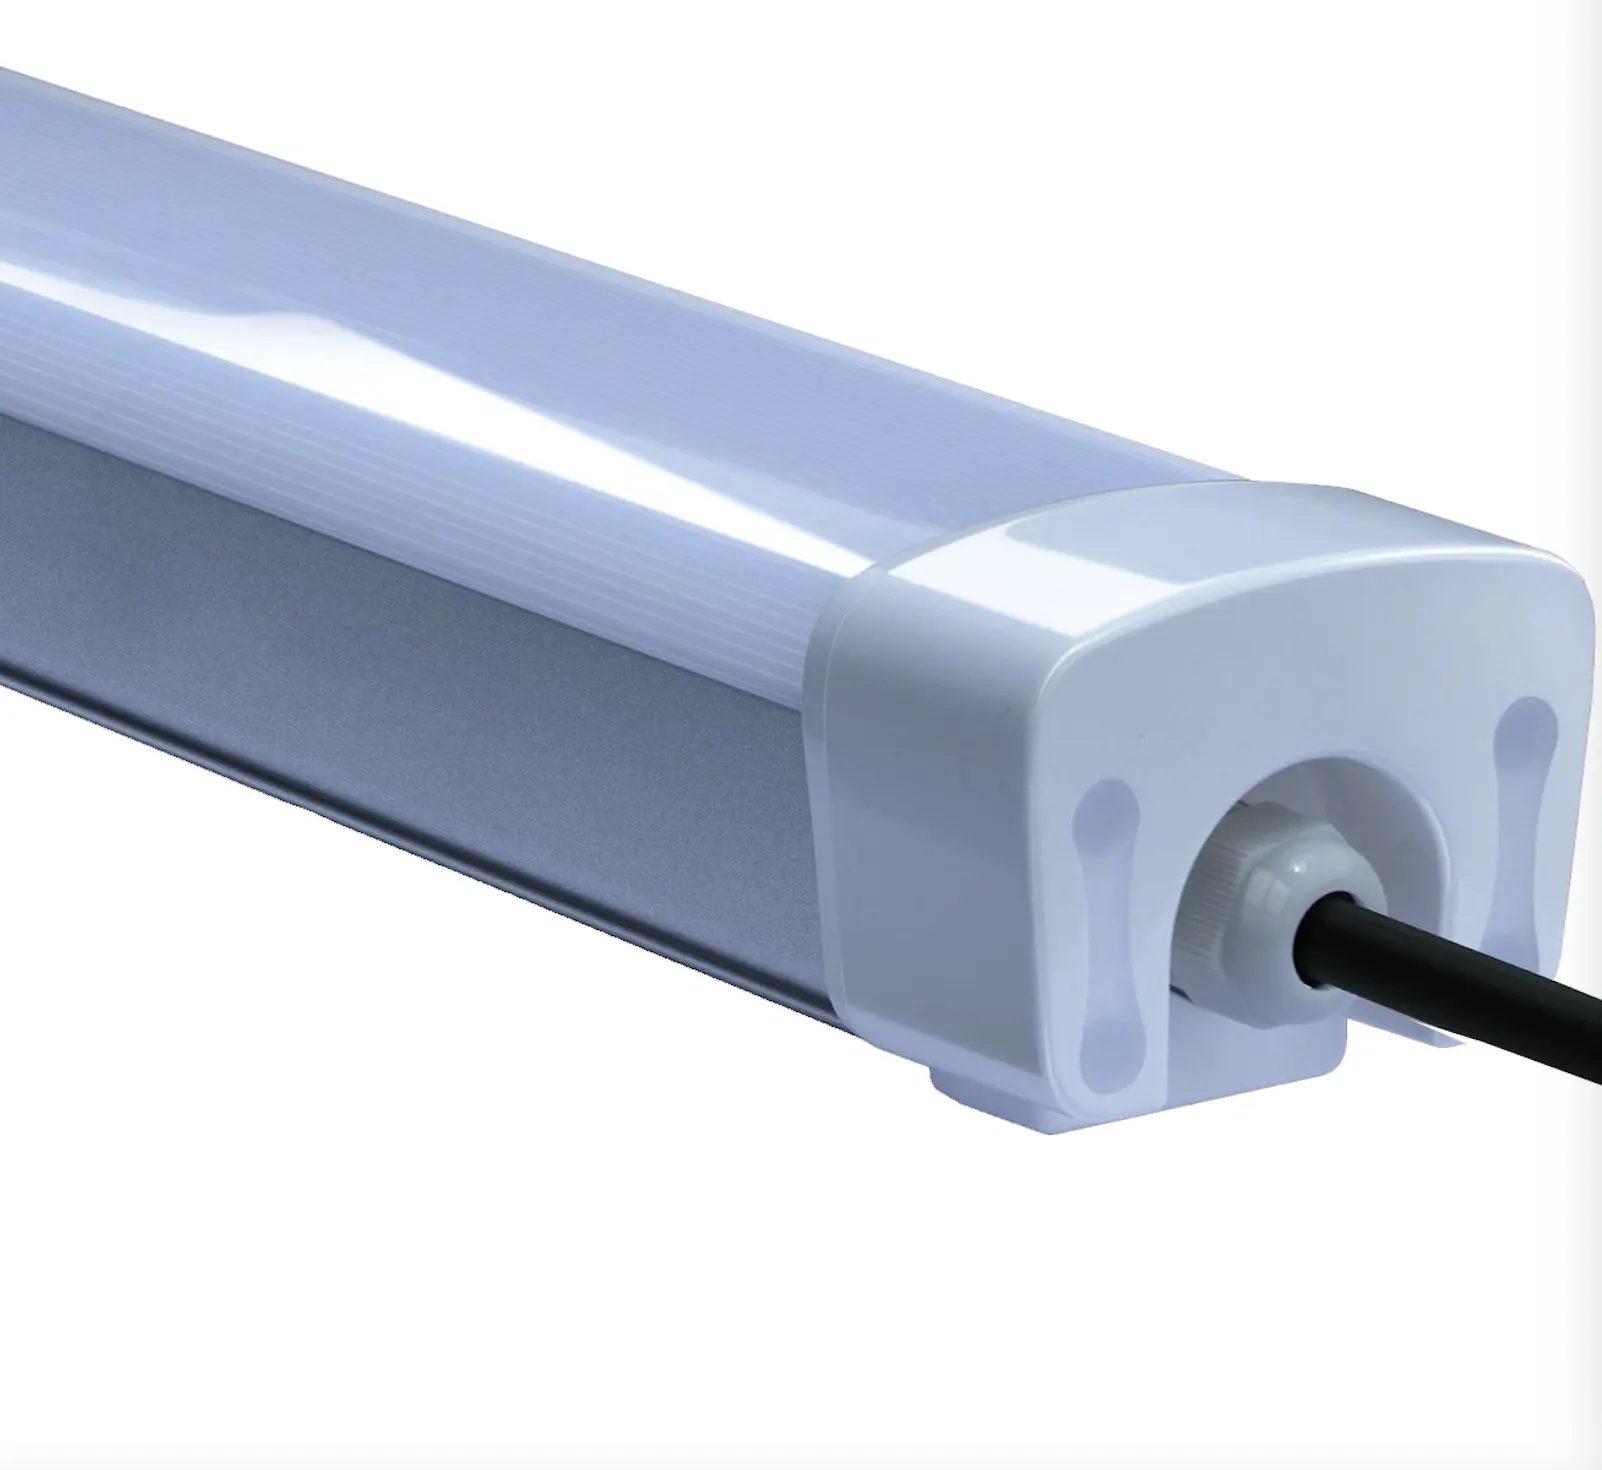 Baru asli Tri Proof Cct Tubular Linear liontin Solar Led Batten cahaya dengan harga yang baik